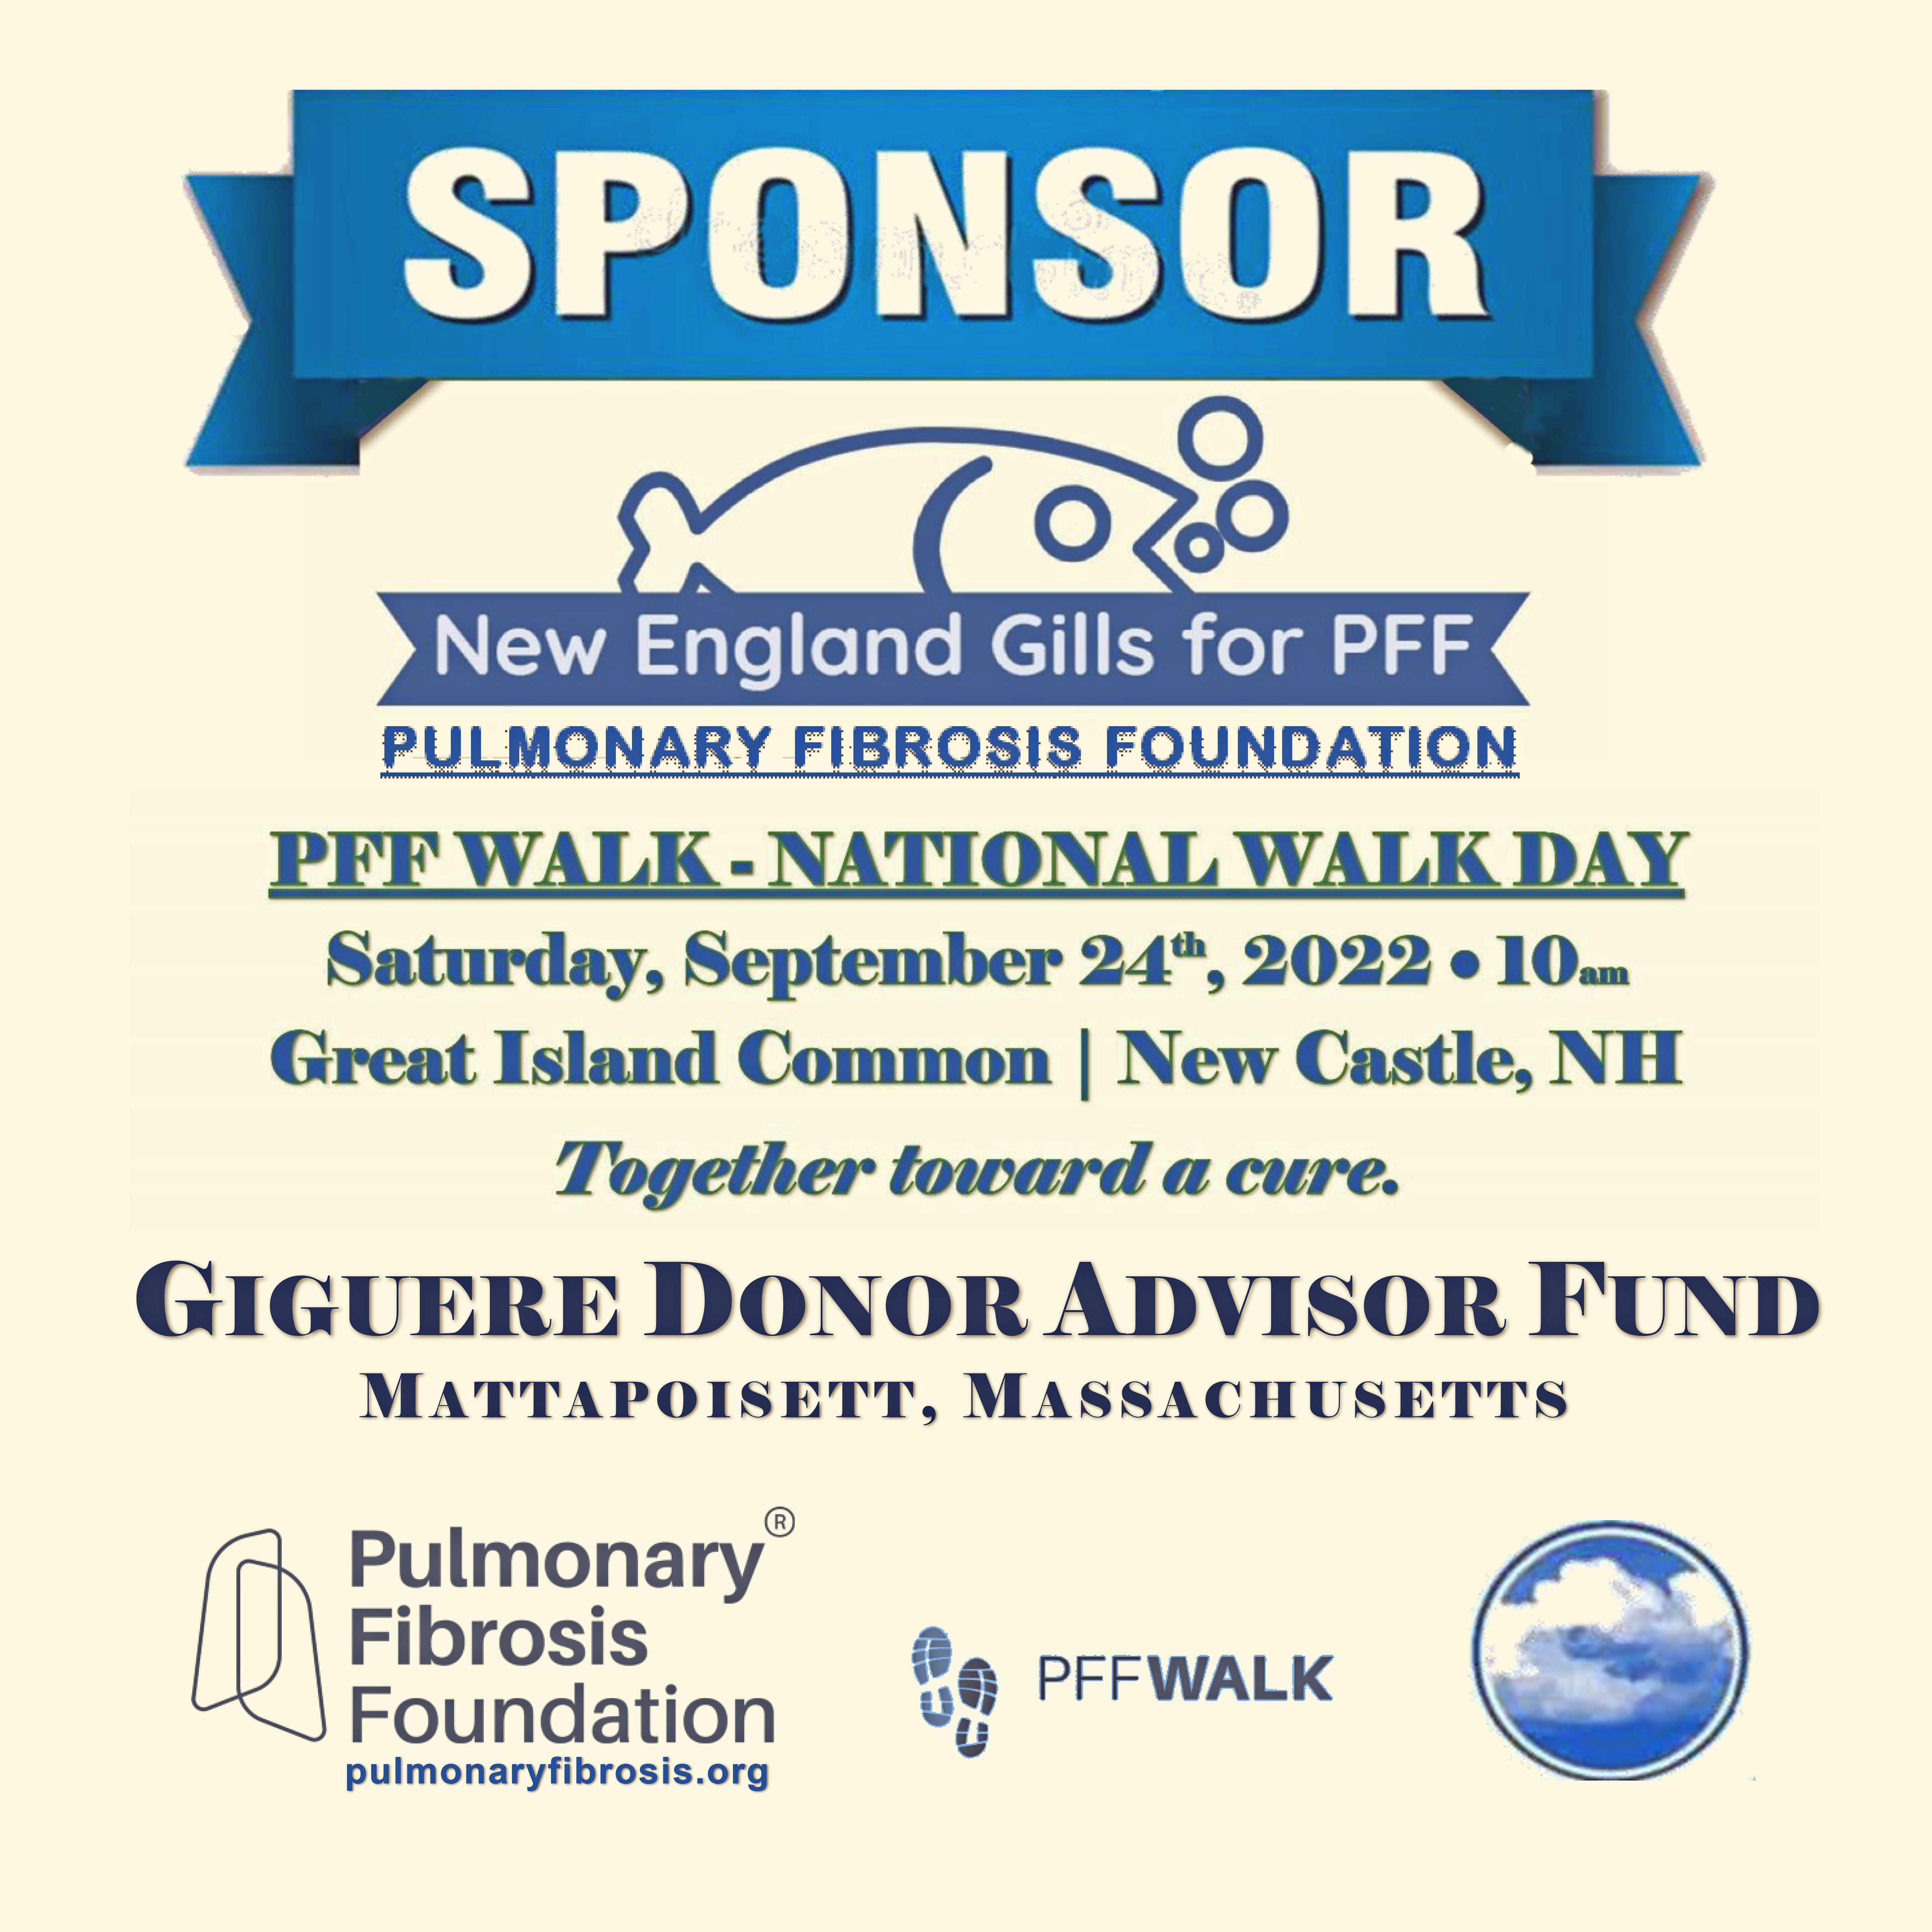 Donation given to support walker John Massaua